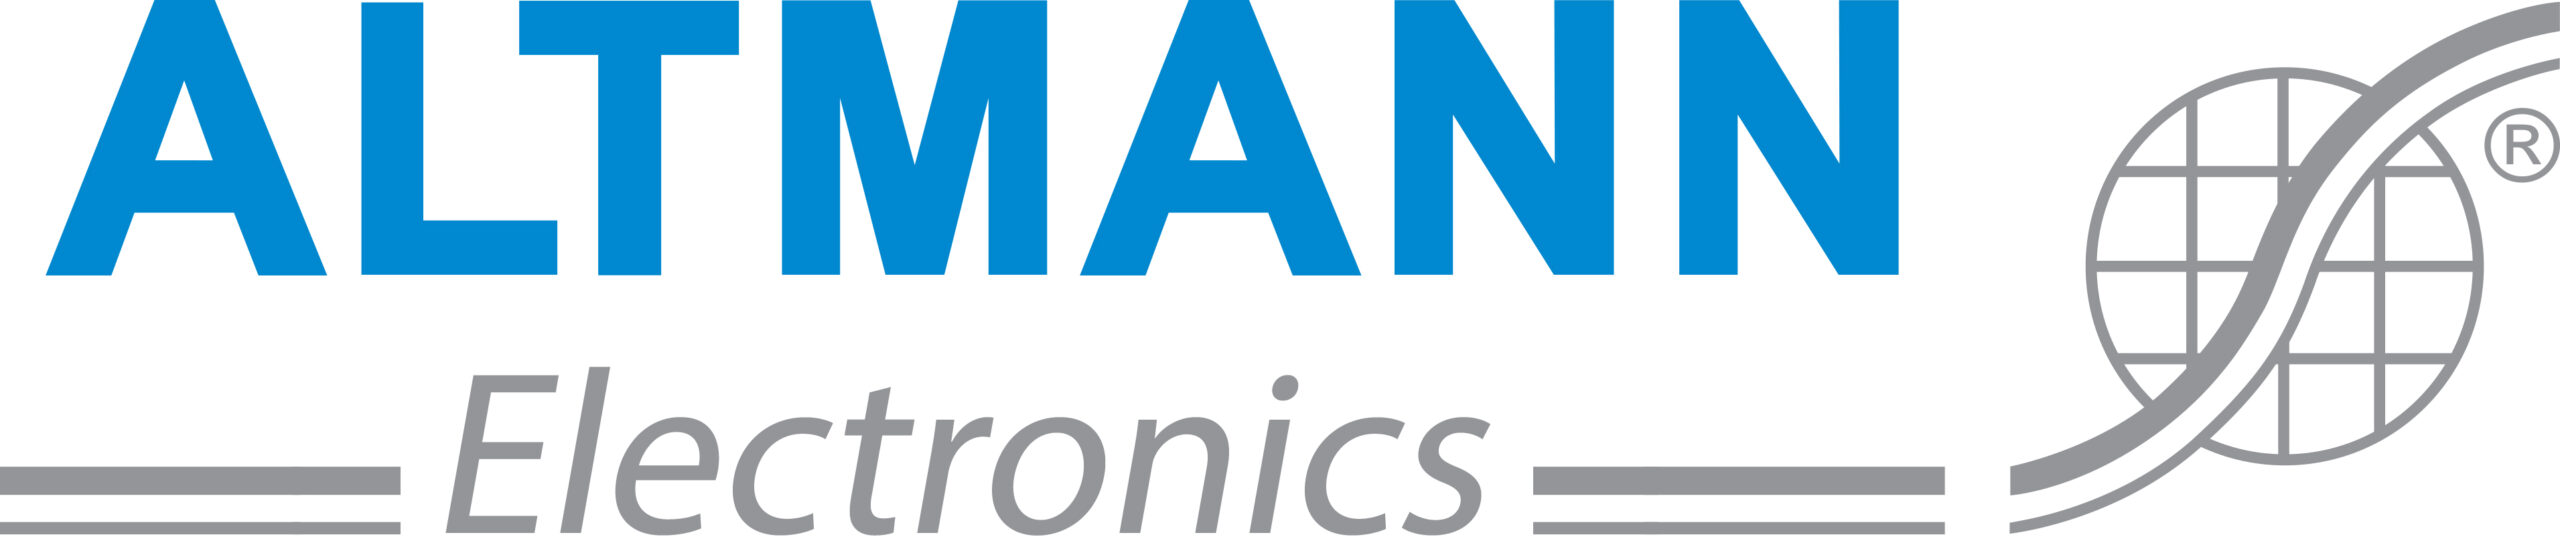 Altmann Electronics GmbH